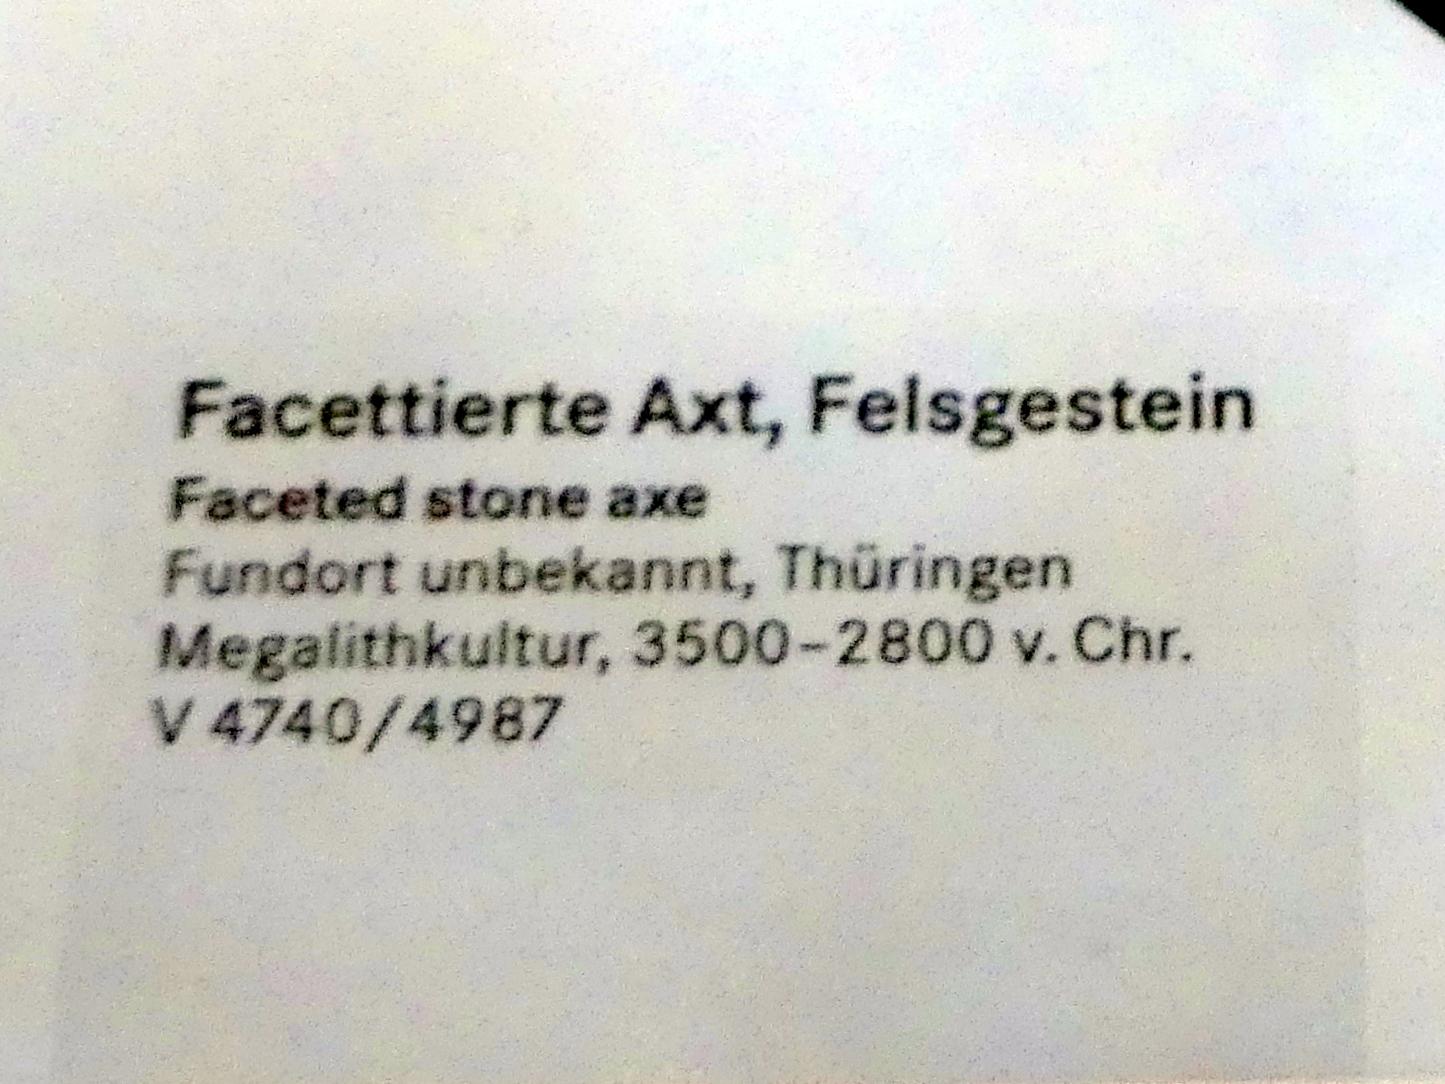 Facettierte Axt, Nordisches Neolithikum, 4400 - 2350 v. Chr., 3500 - 2800 v. Chr., Bild 2/2